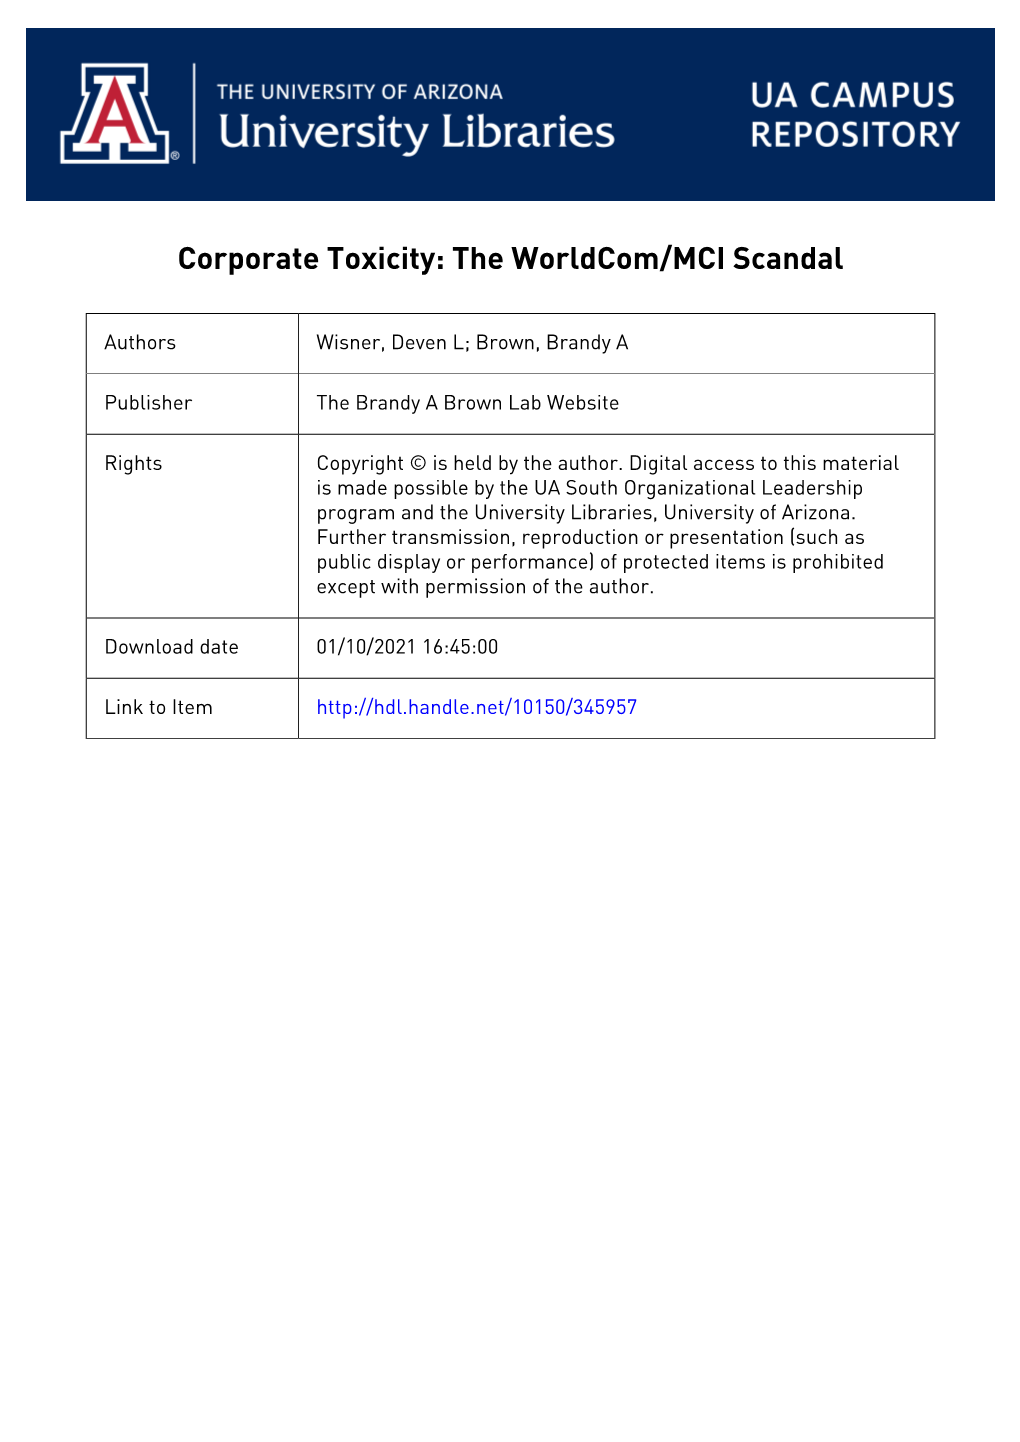 The Worldcom/MCI Scandal